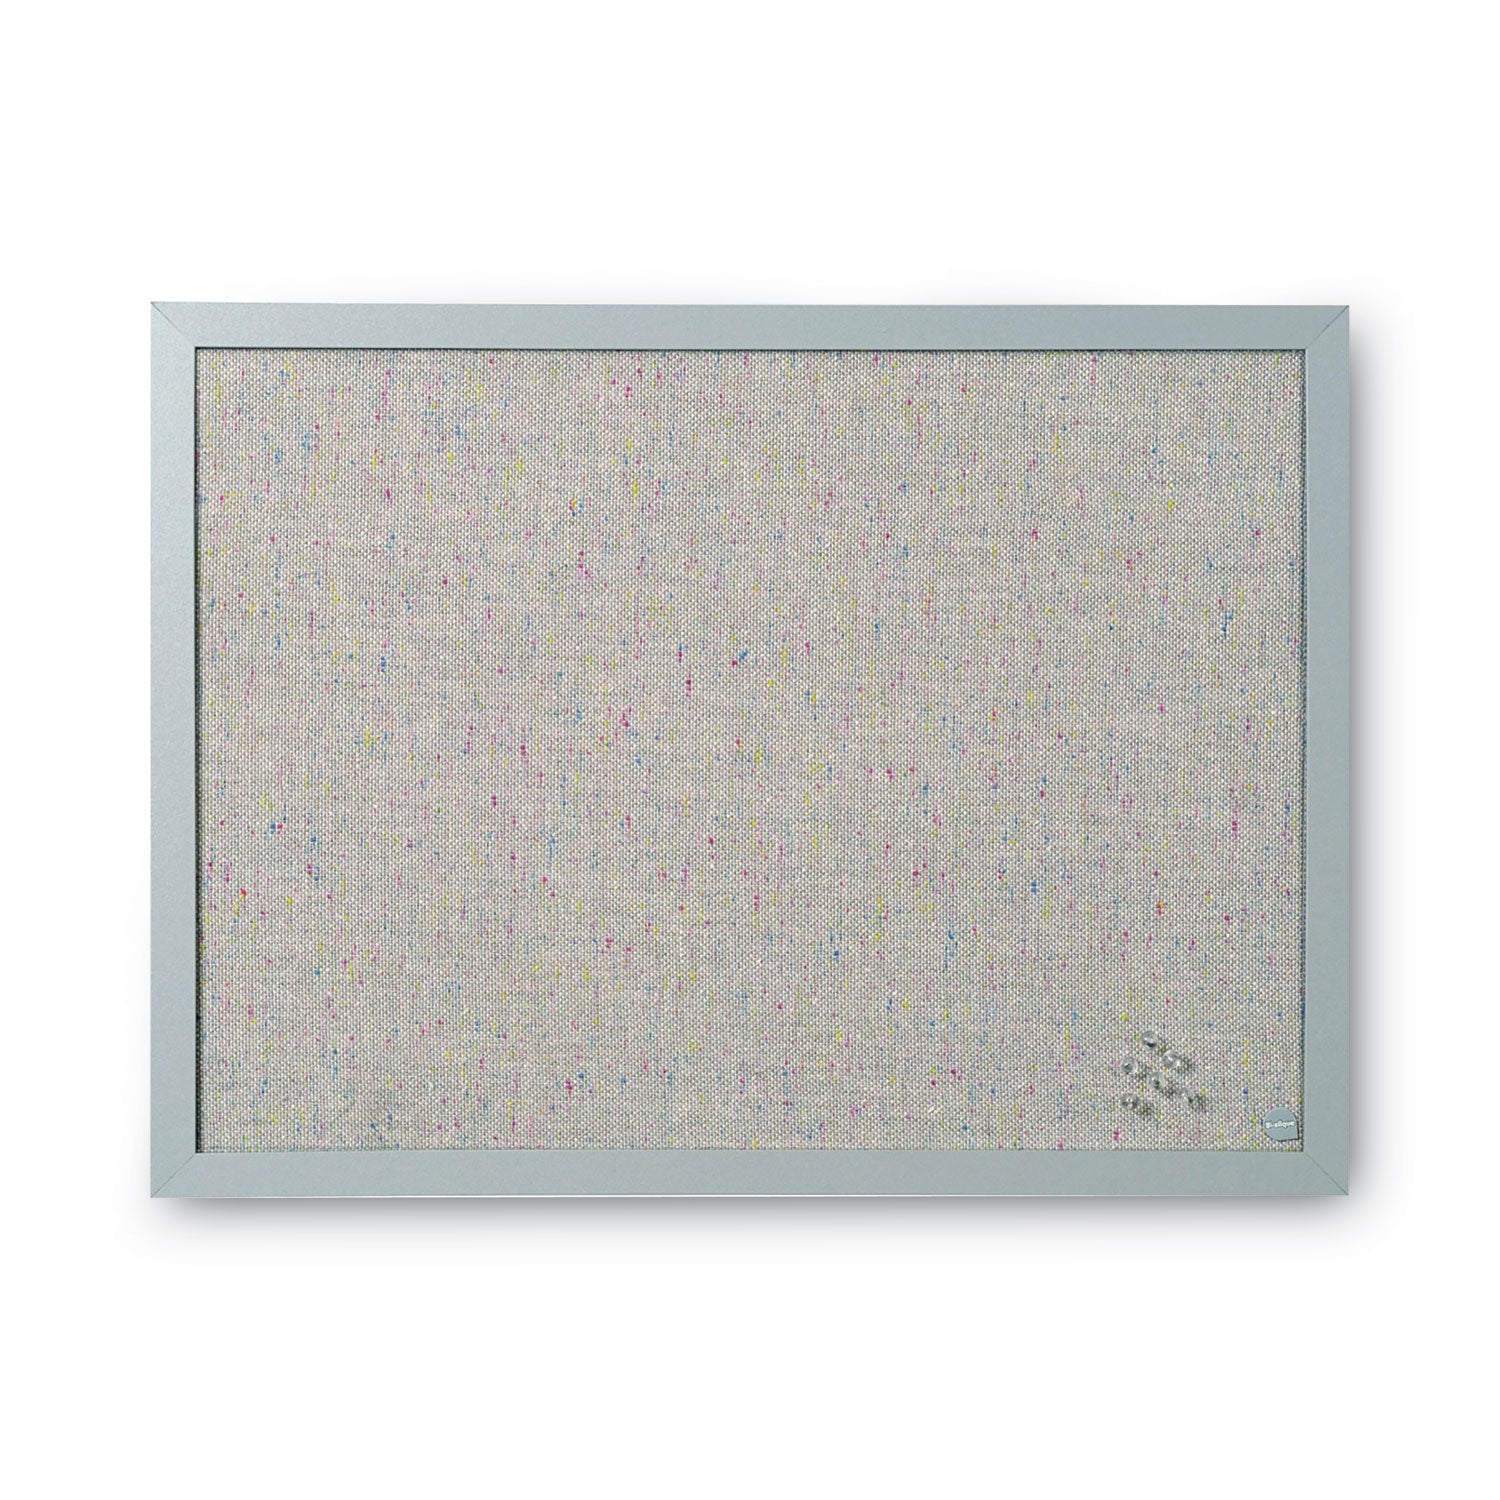 Designer Fabric Bulletin Board, 24 x 18, Gray Surface, Gray MDF Wood Frame - 